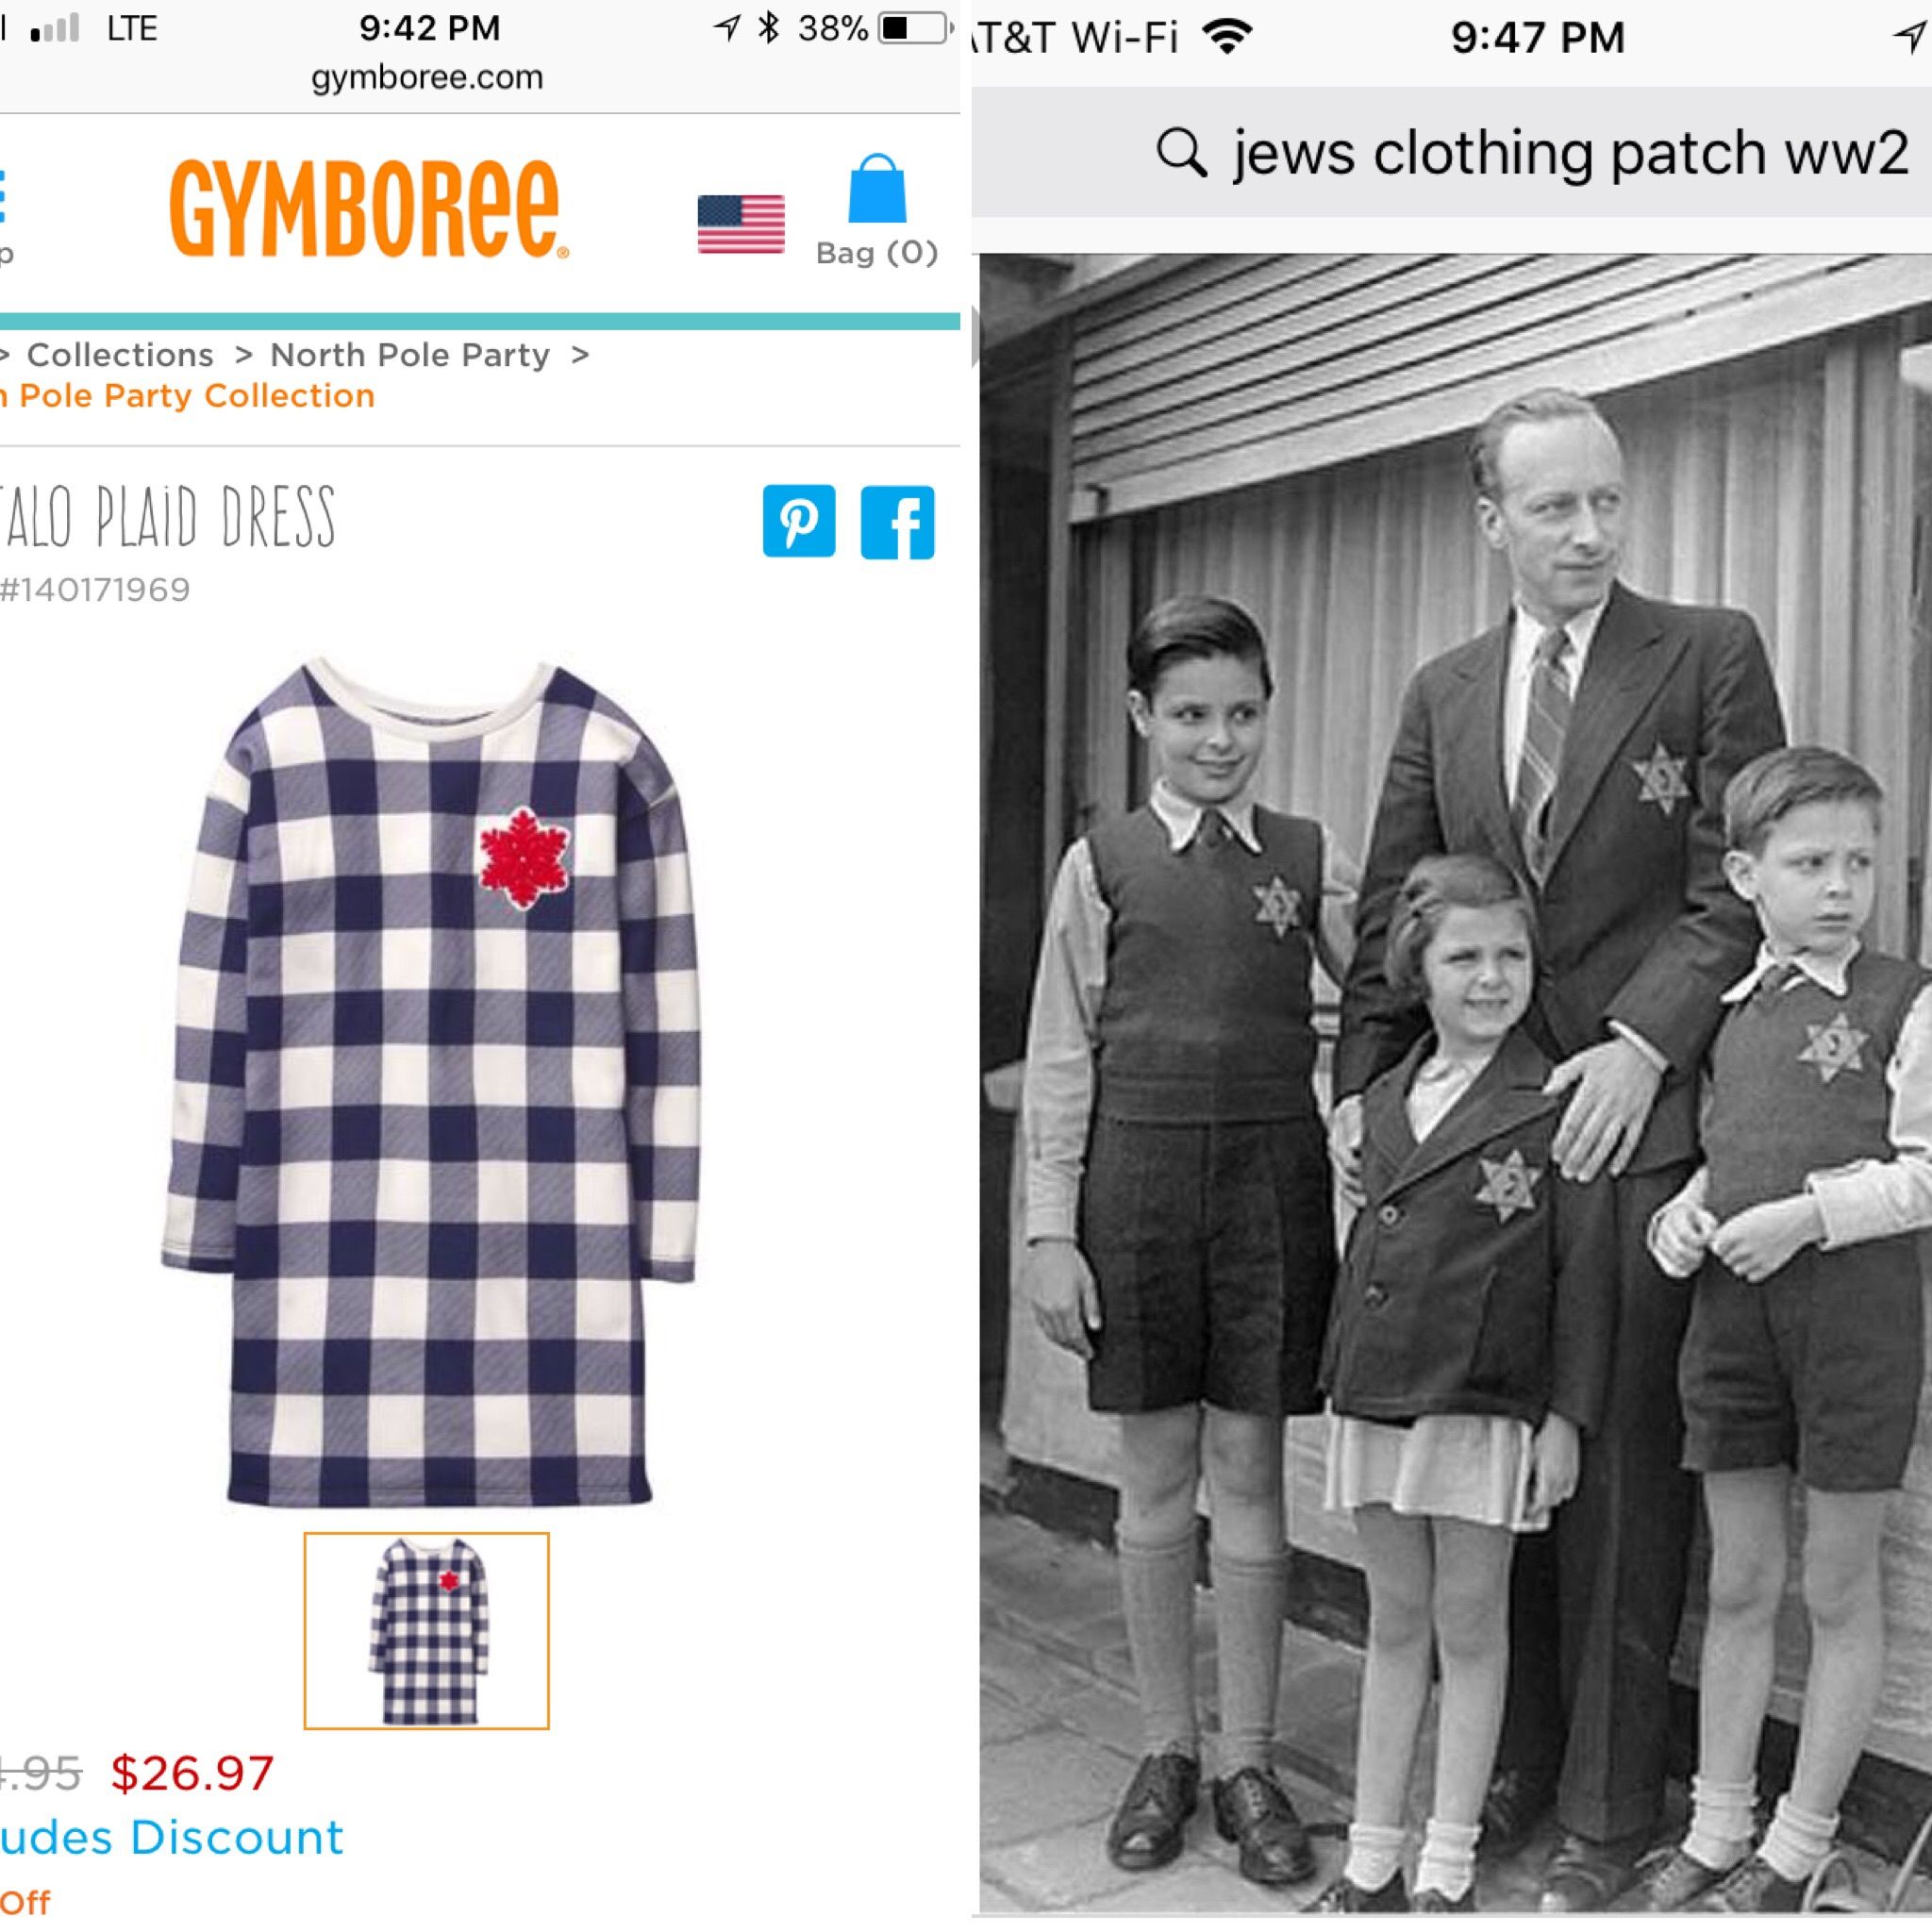 Holocaust-Era 'Jewish Star' Toddler Dress Sold at Gymboree Sparks Outrage